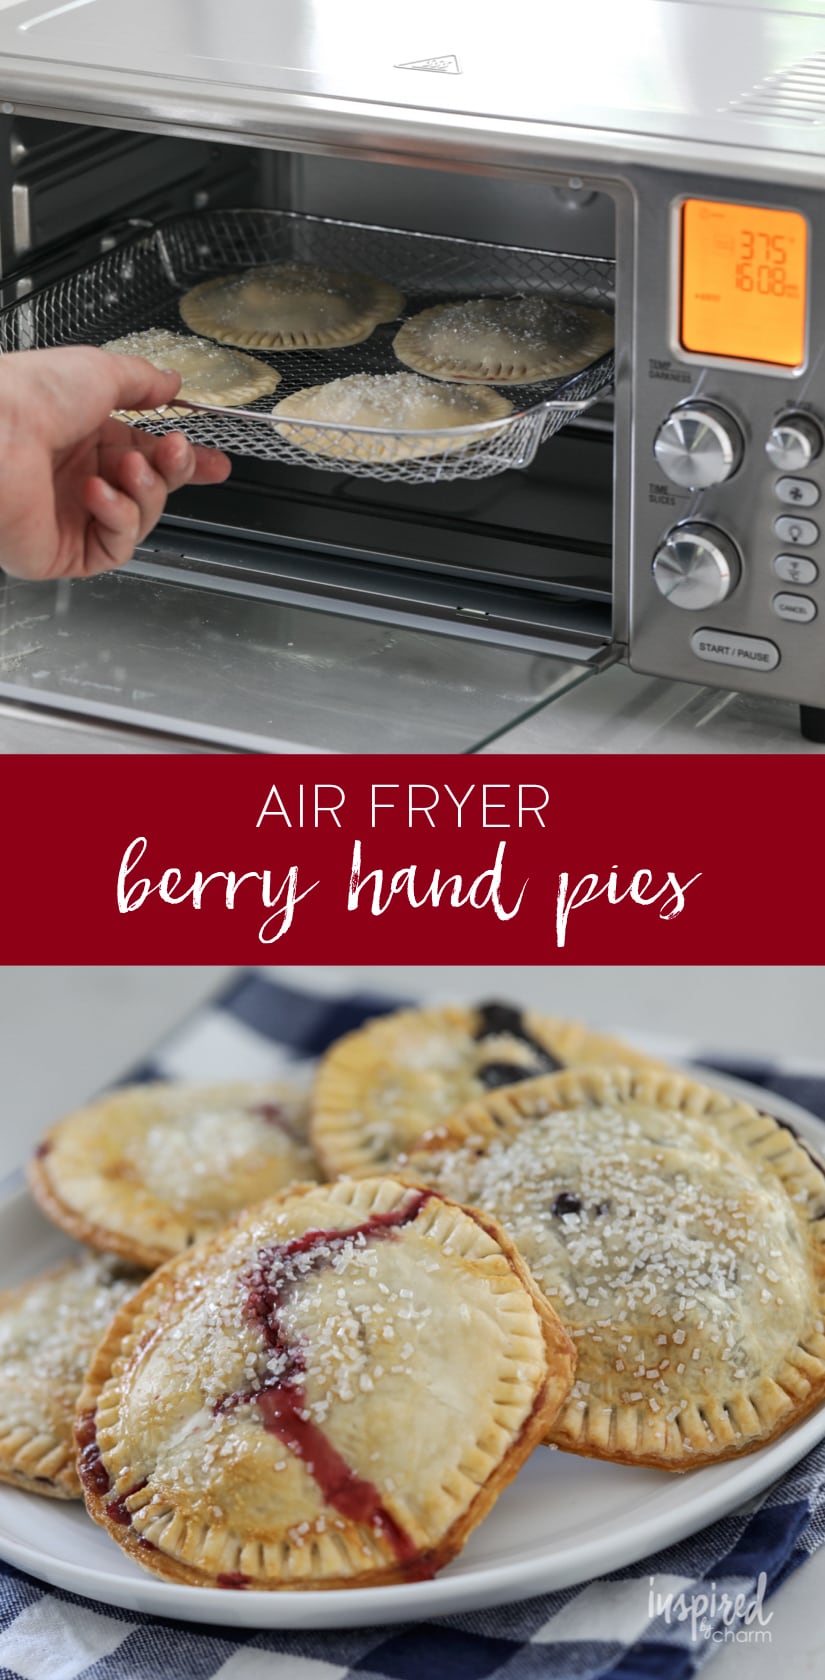 Delicious Air Fryer Berry Hand Pies dessert recipe idea! #handpies #pie #dessert #recipe #airfryer #berries